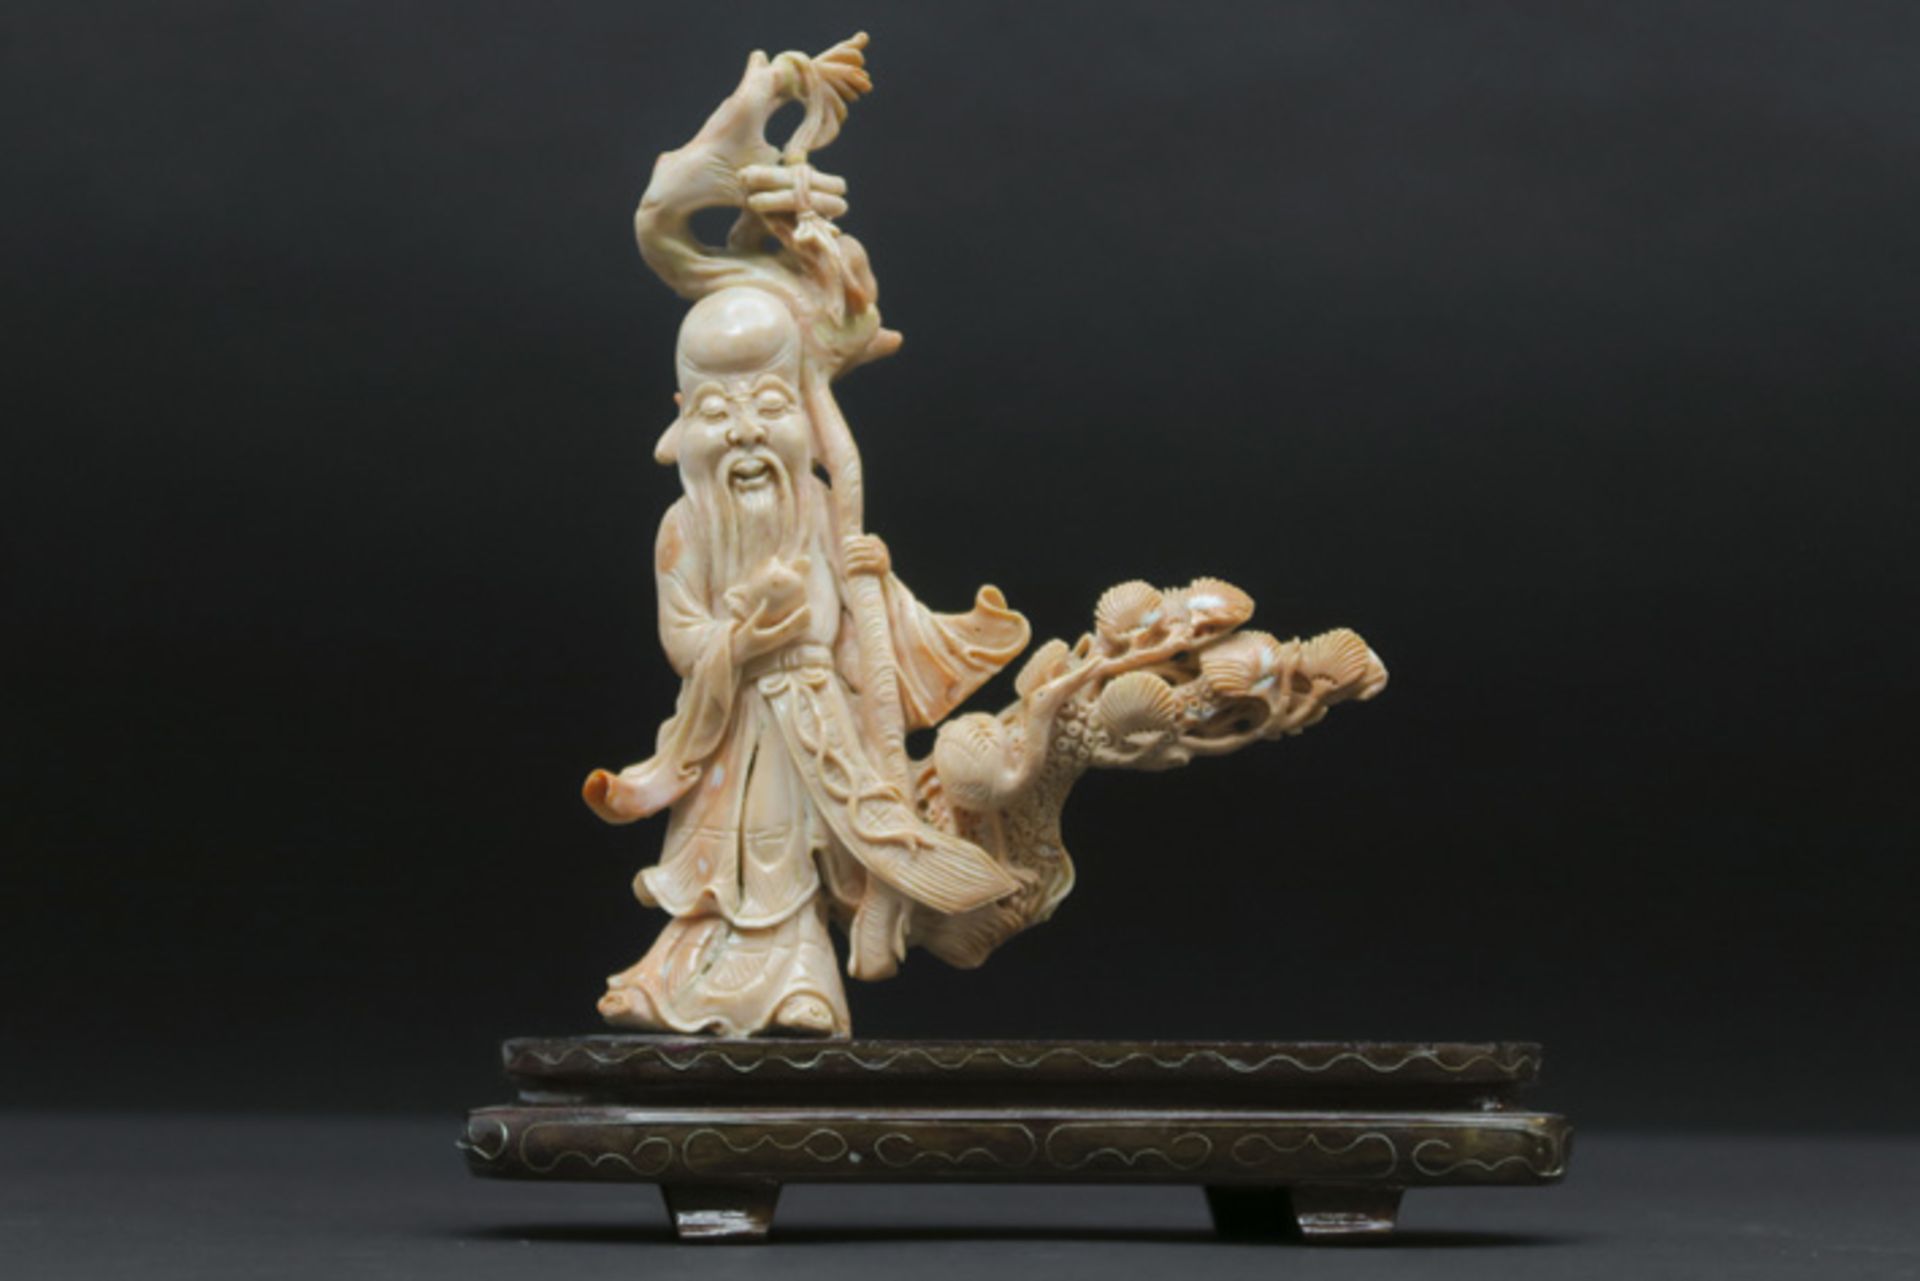 Oude Chinese sculptuur in koraal : "Onsterfelijke" - hoogte en breedte : 17,5 en 13,5 cm - gewicht :